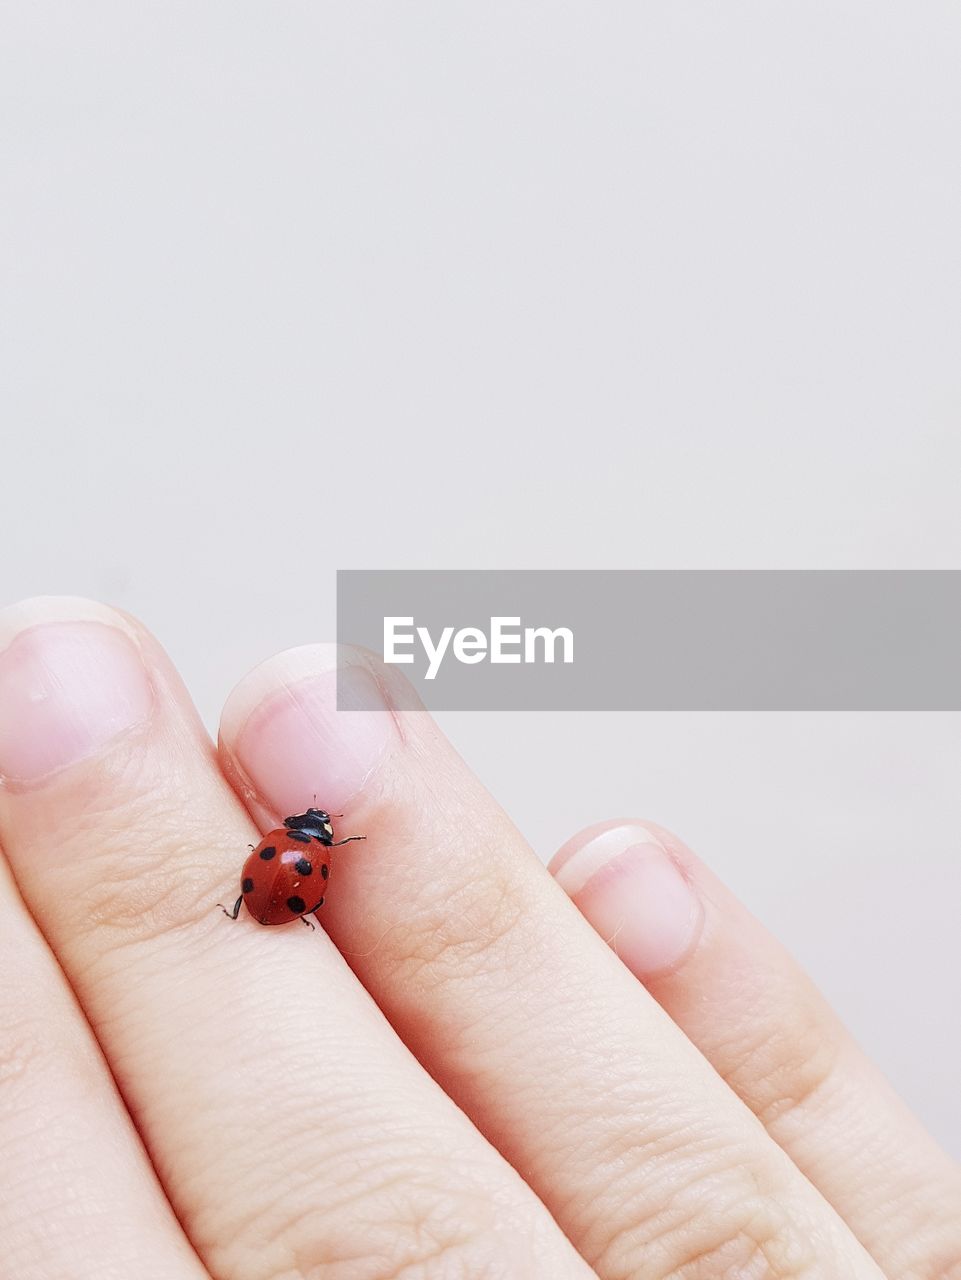 Ladybug on woman's hand